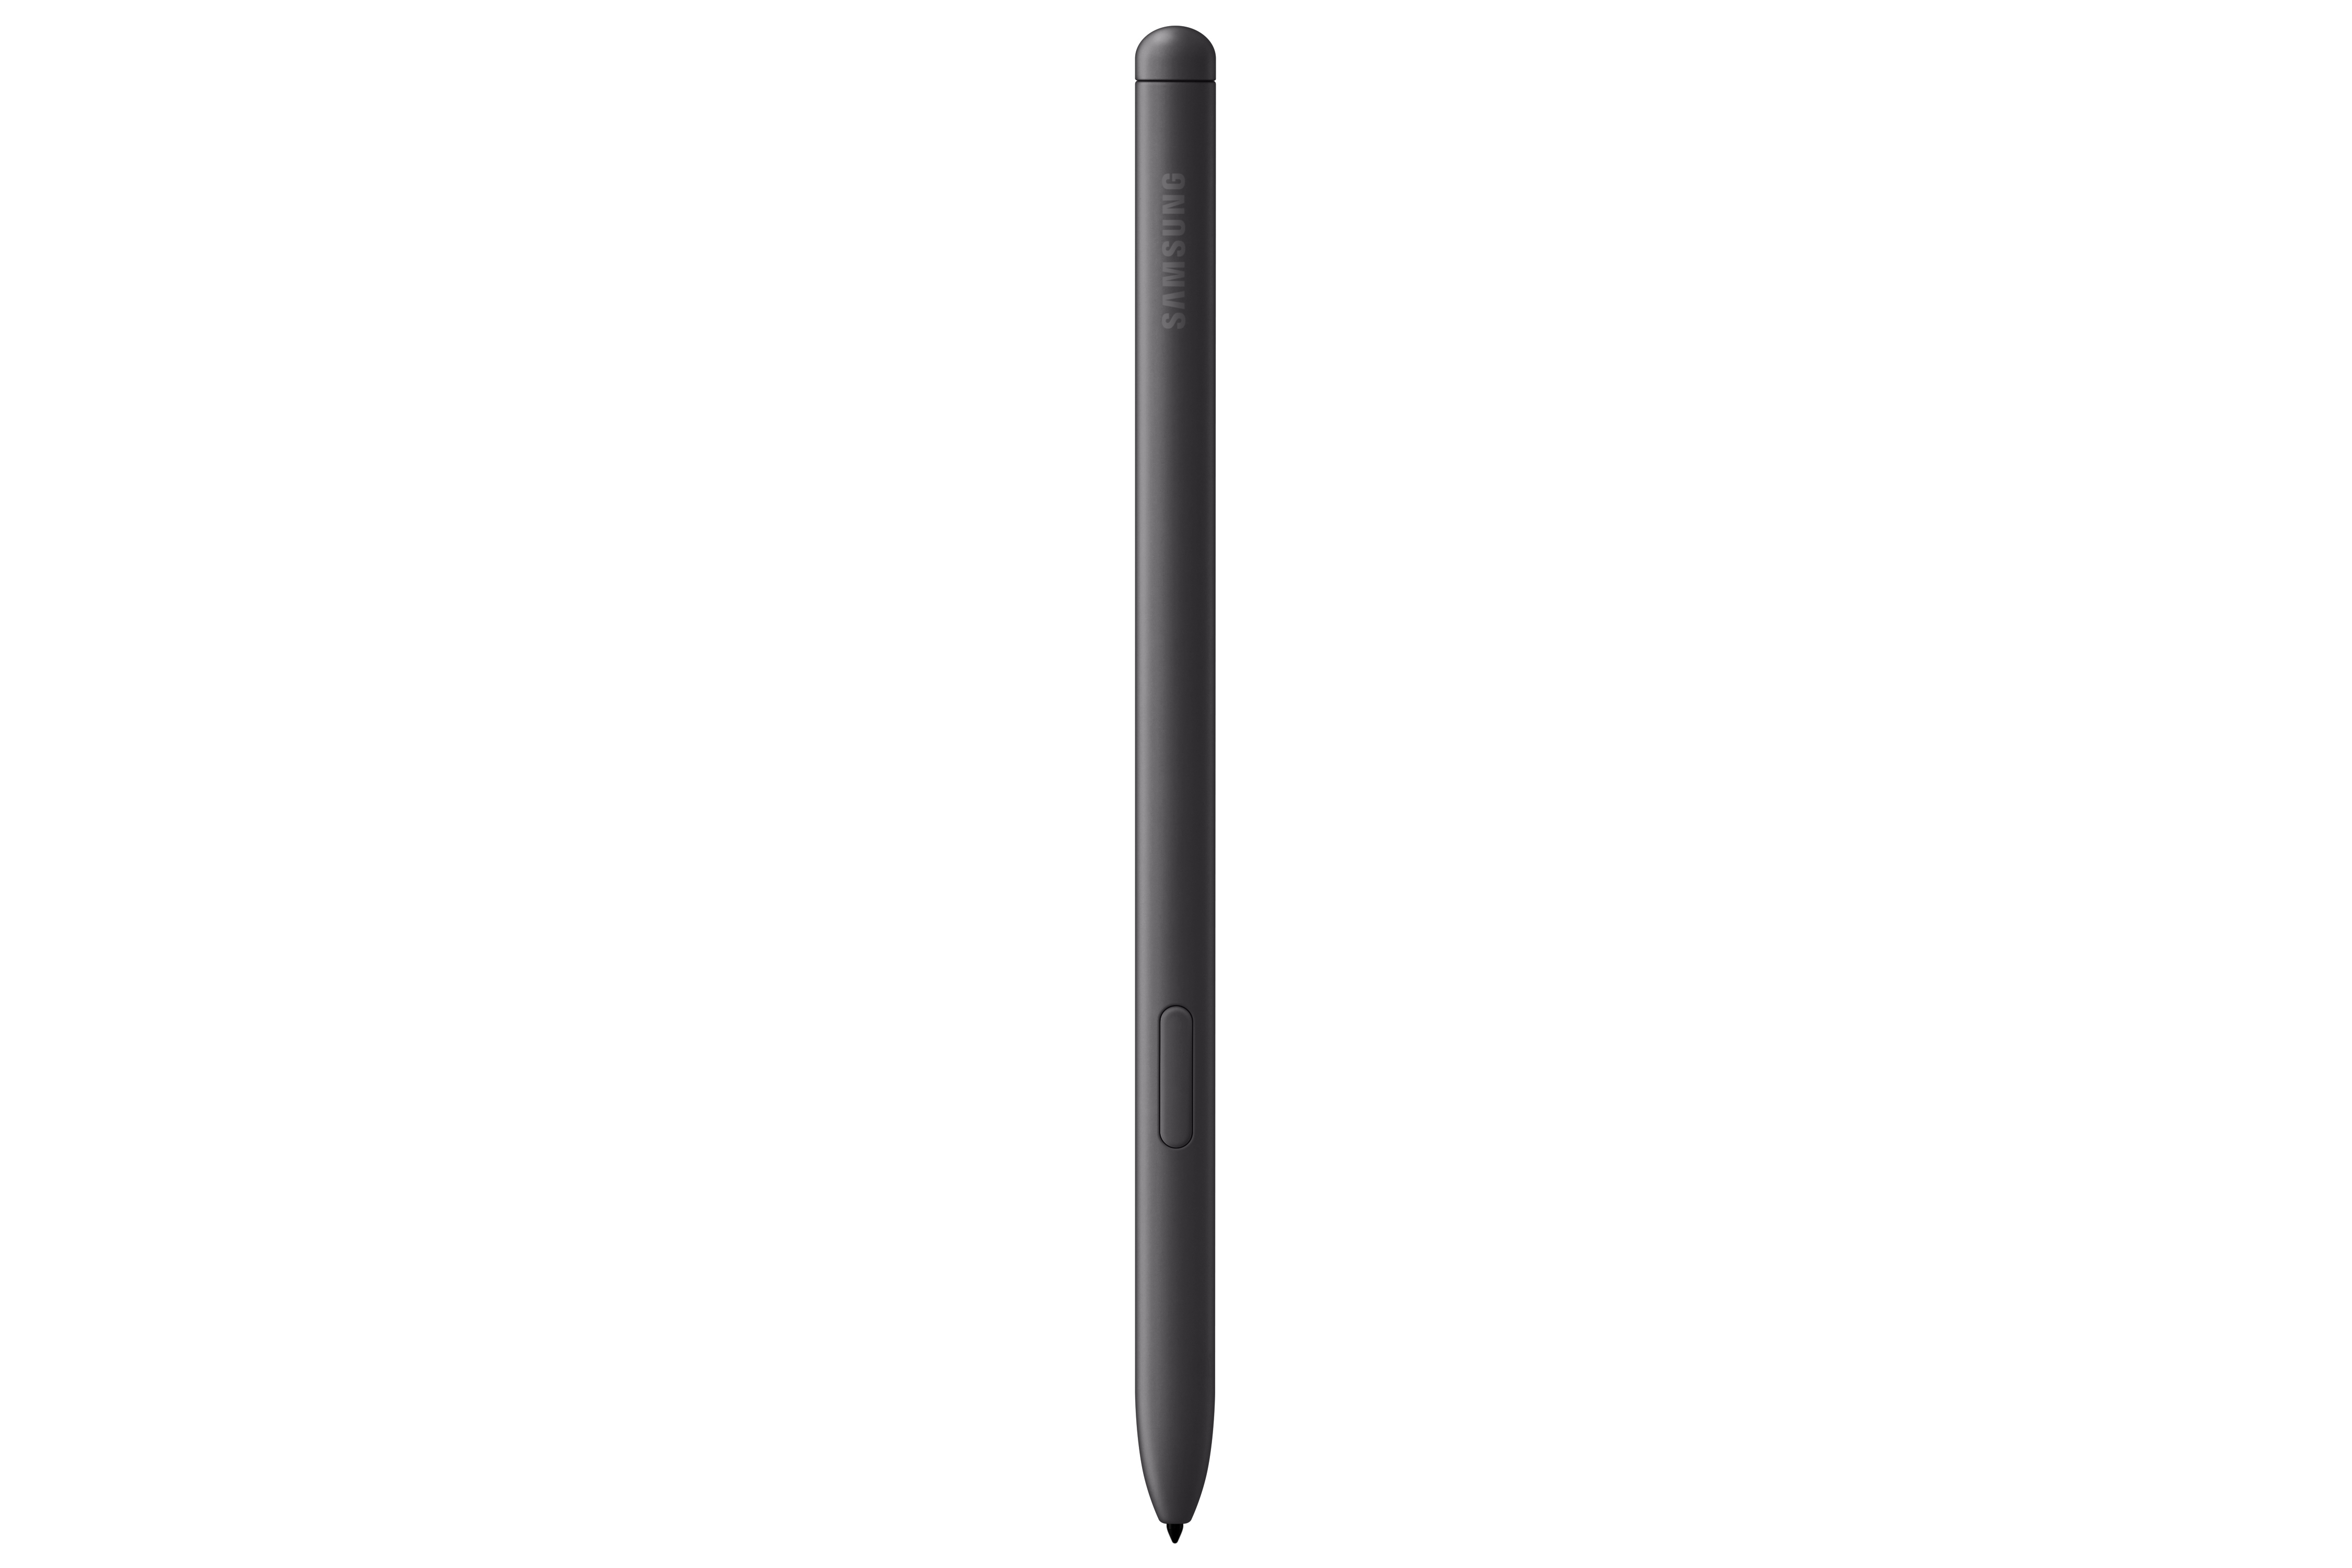 Samsung Galaxy Tab S6 Lite, Tablet met Android 10, 64 GB, 10.4 TFT (2000 x 1200), microSD sleuf - Oxford-grijs